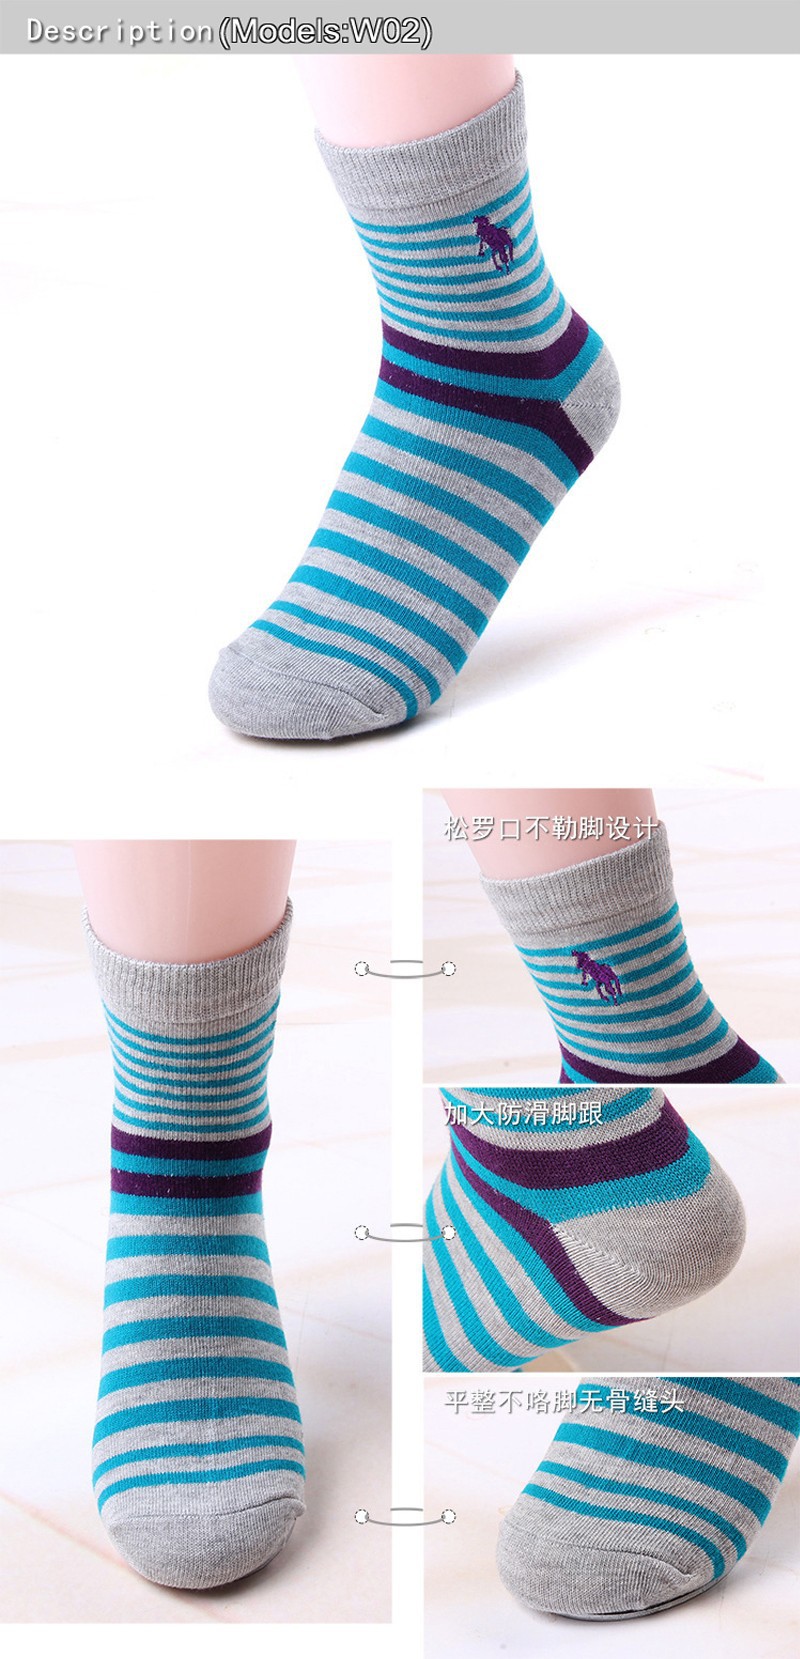 new high quality spring summer casual female socks women Brand Cotton women socks Colorful polo Socks for women3asdasd